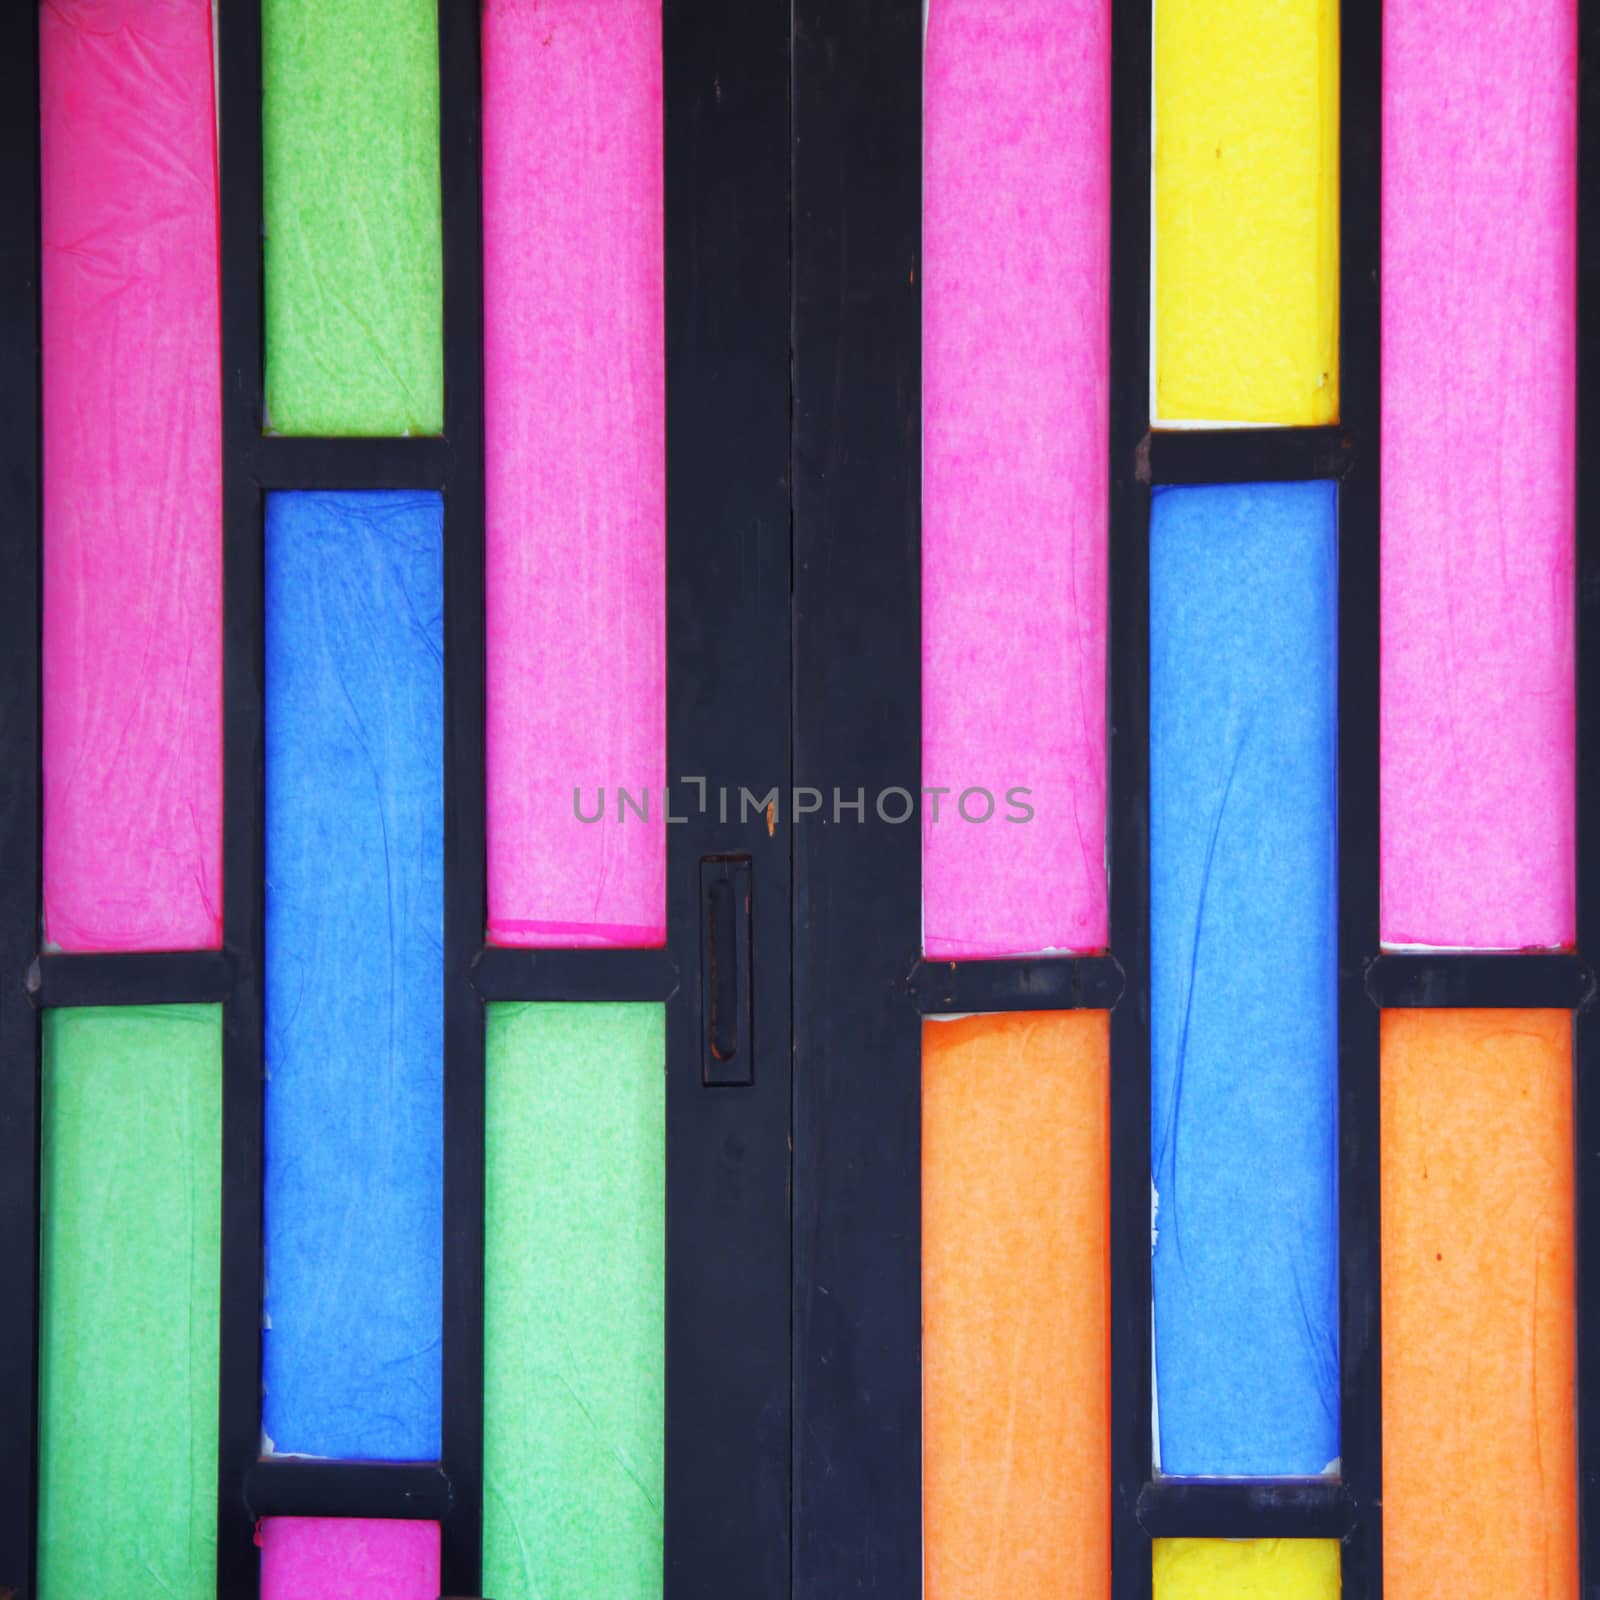 Multicolor paper on slide doors for background